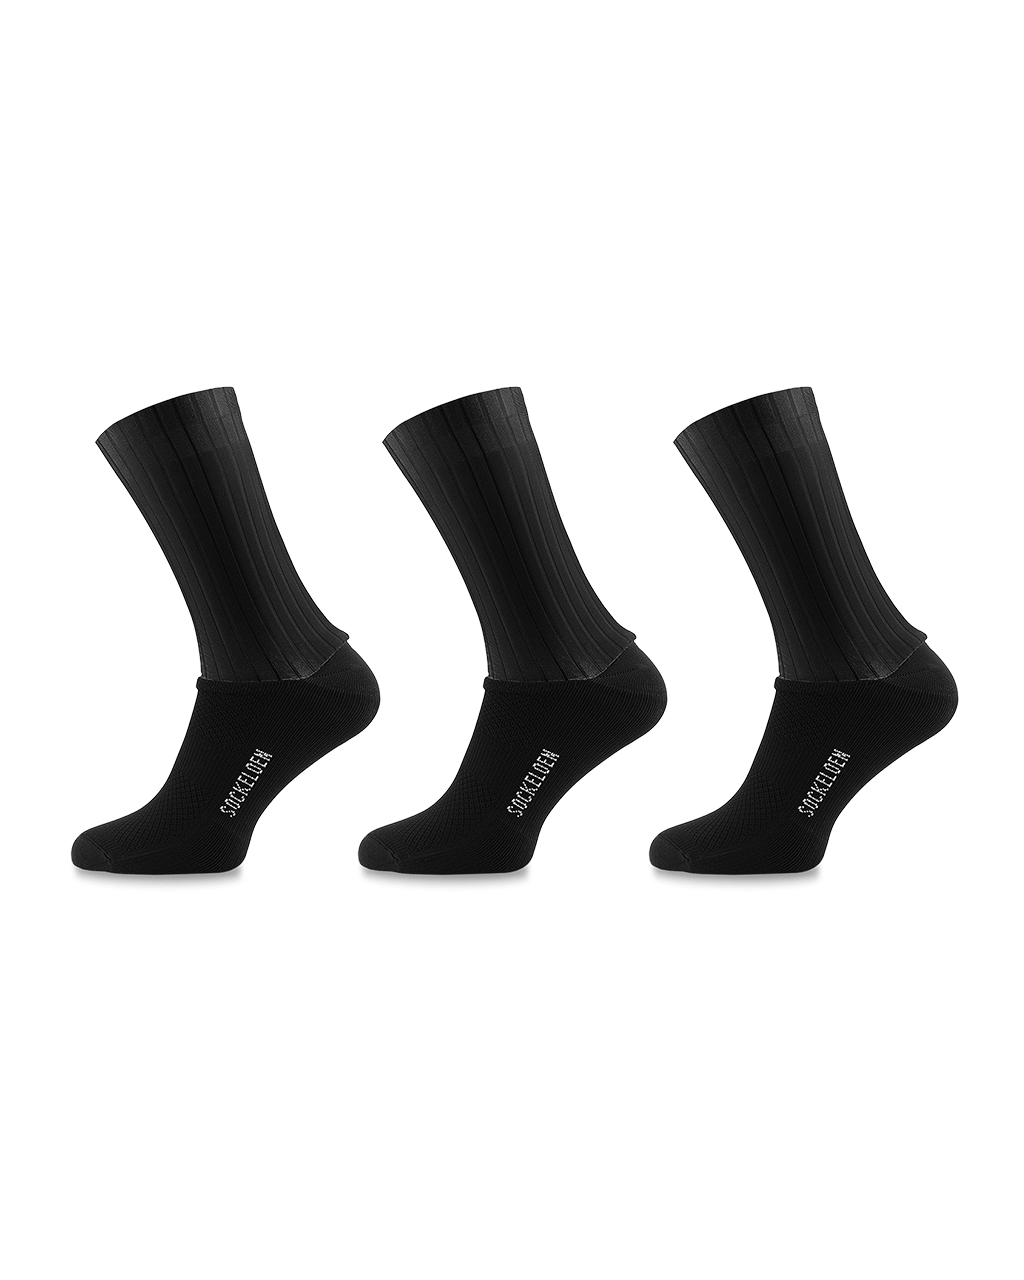 Allblack-sockeloen-aero-cycling-socks-3-pack